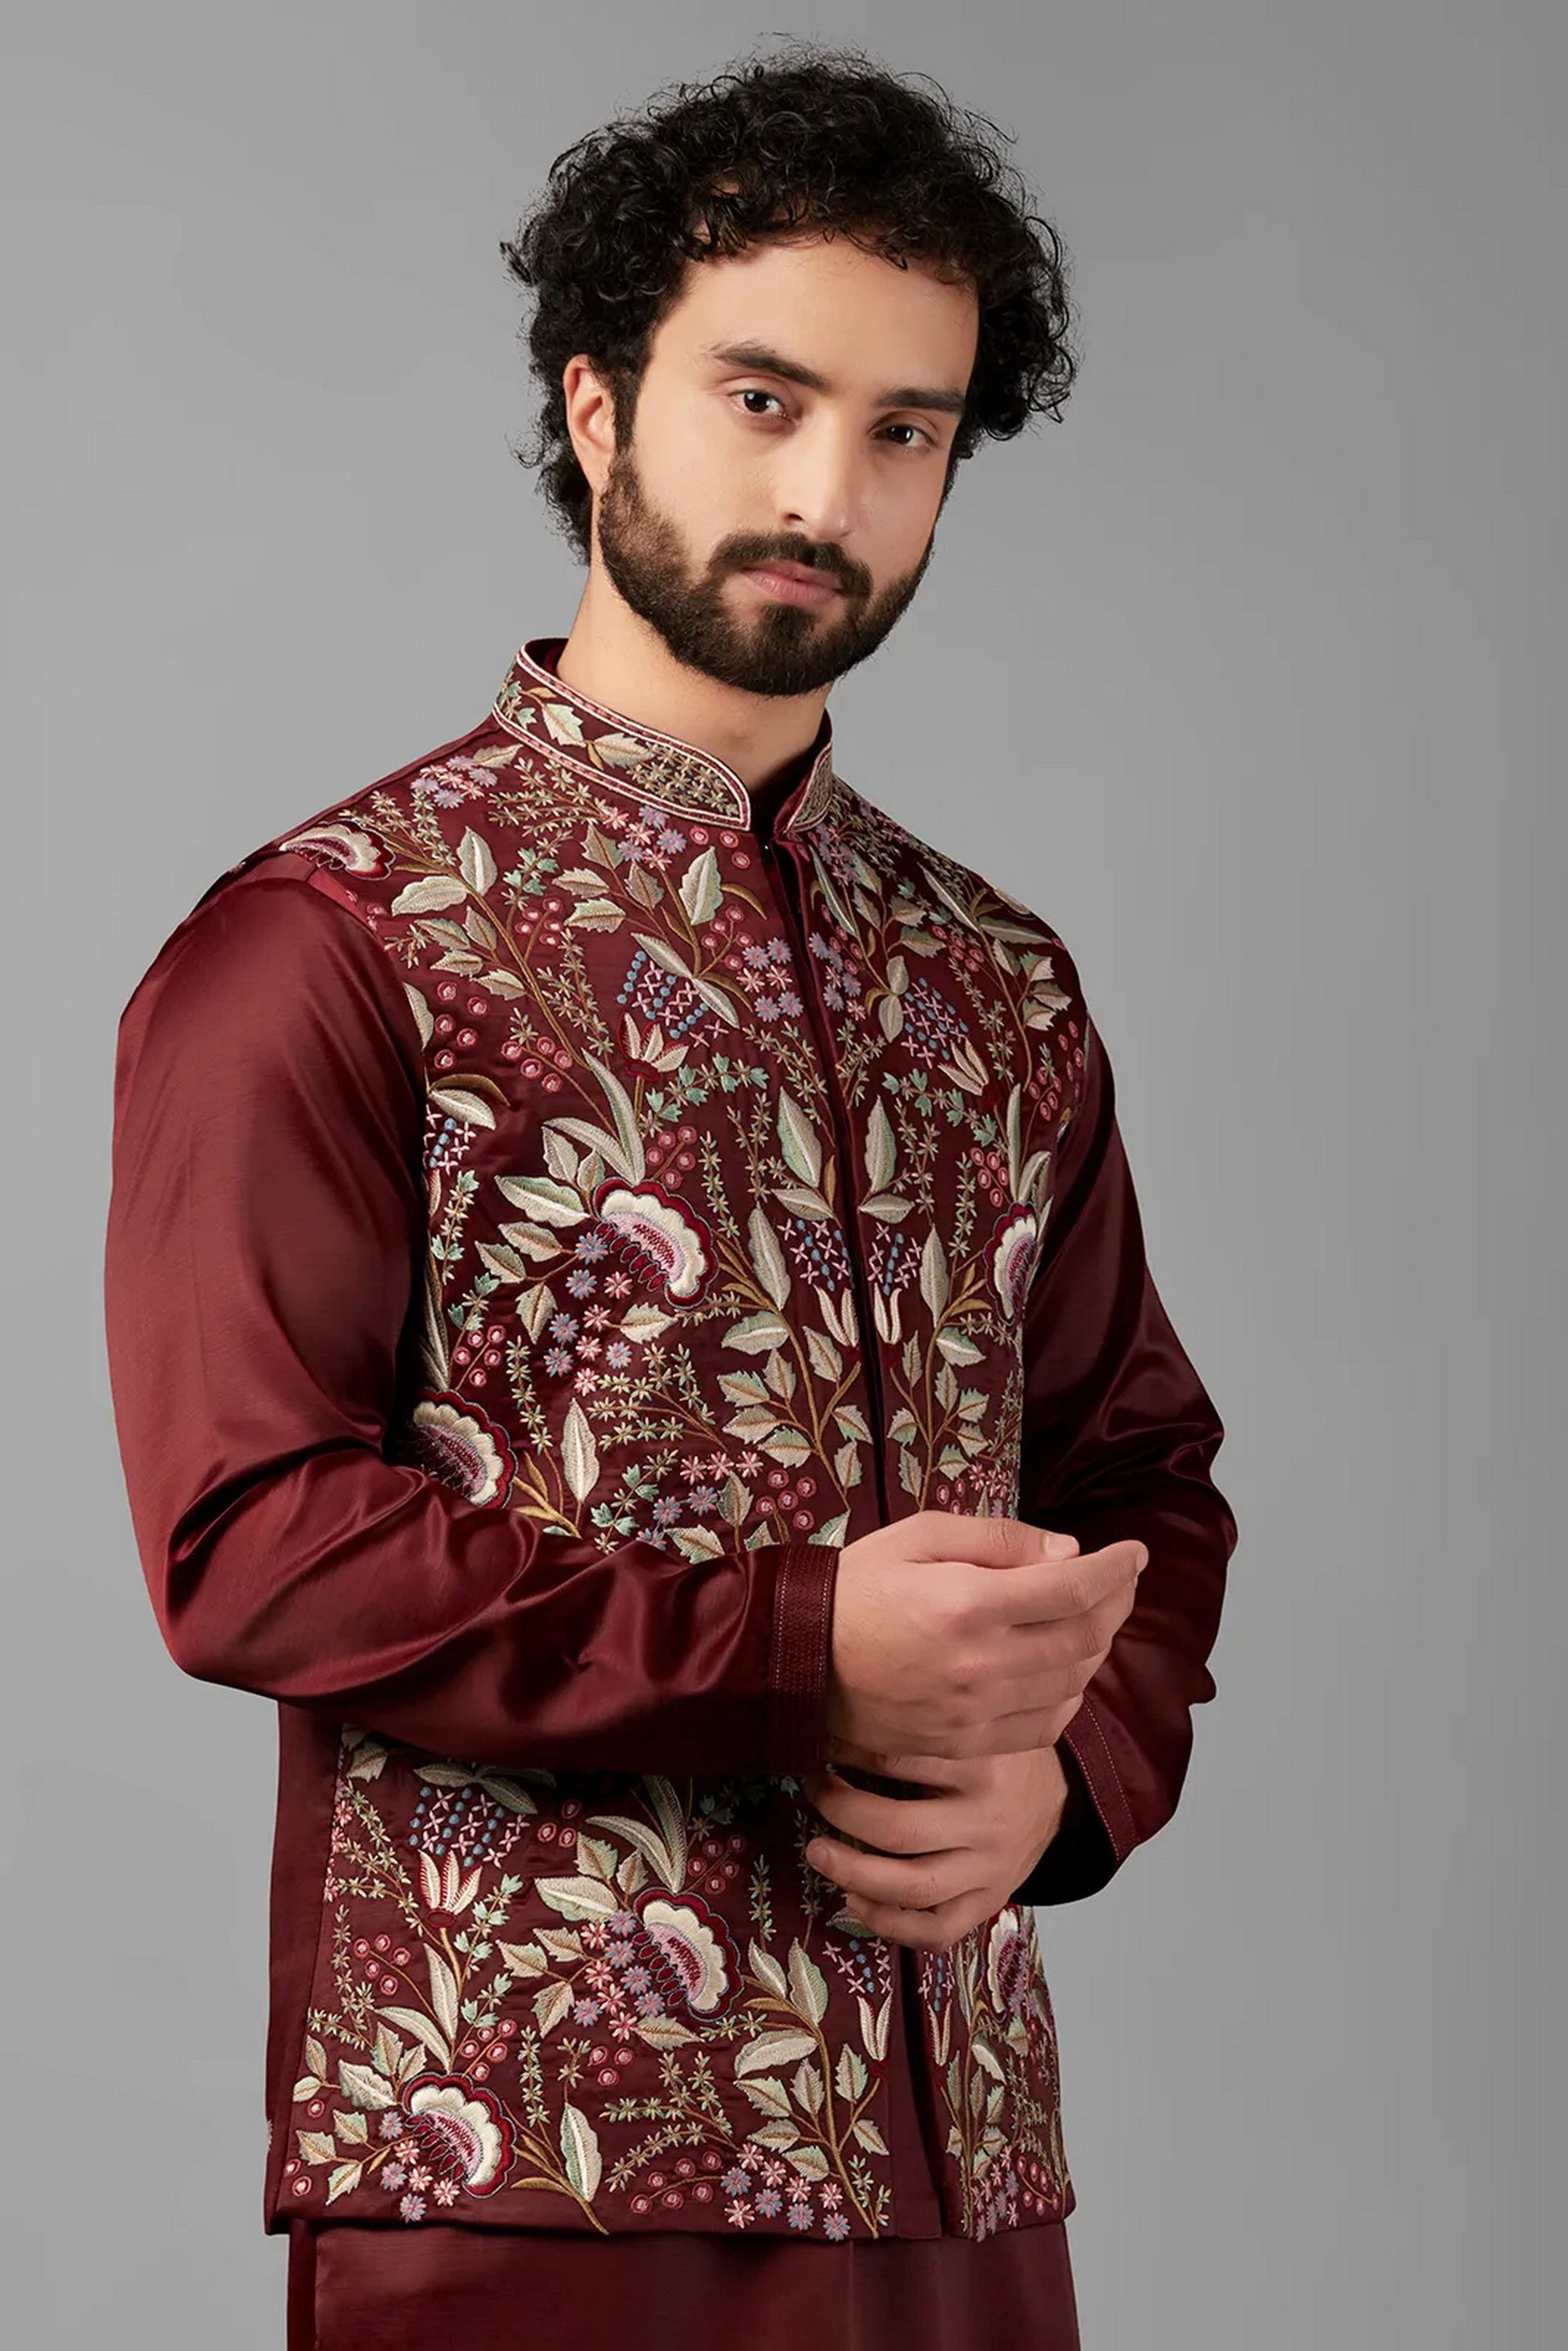 Maroon Shiny Polyester Silk Men's Wedding Suit Waistcoat, Kurta with Pant - Embroidery Work